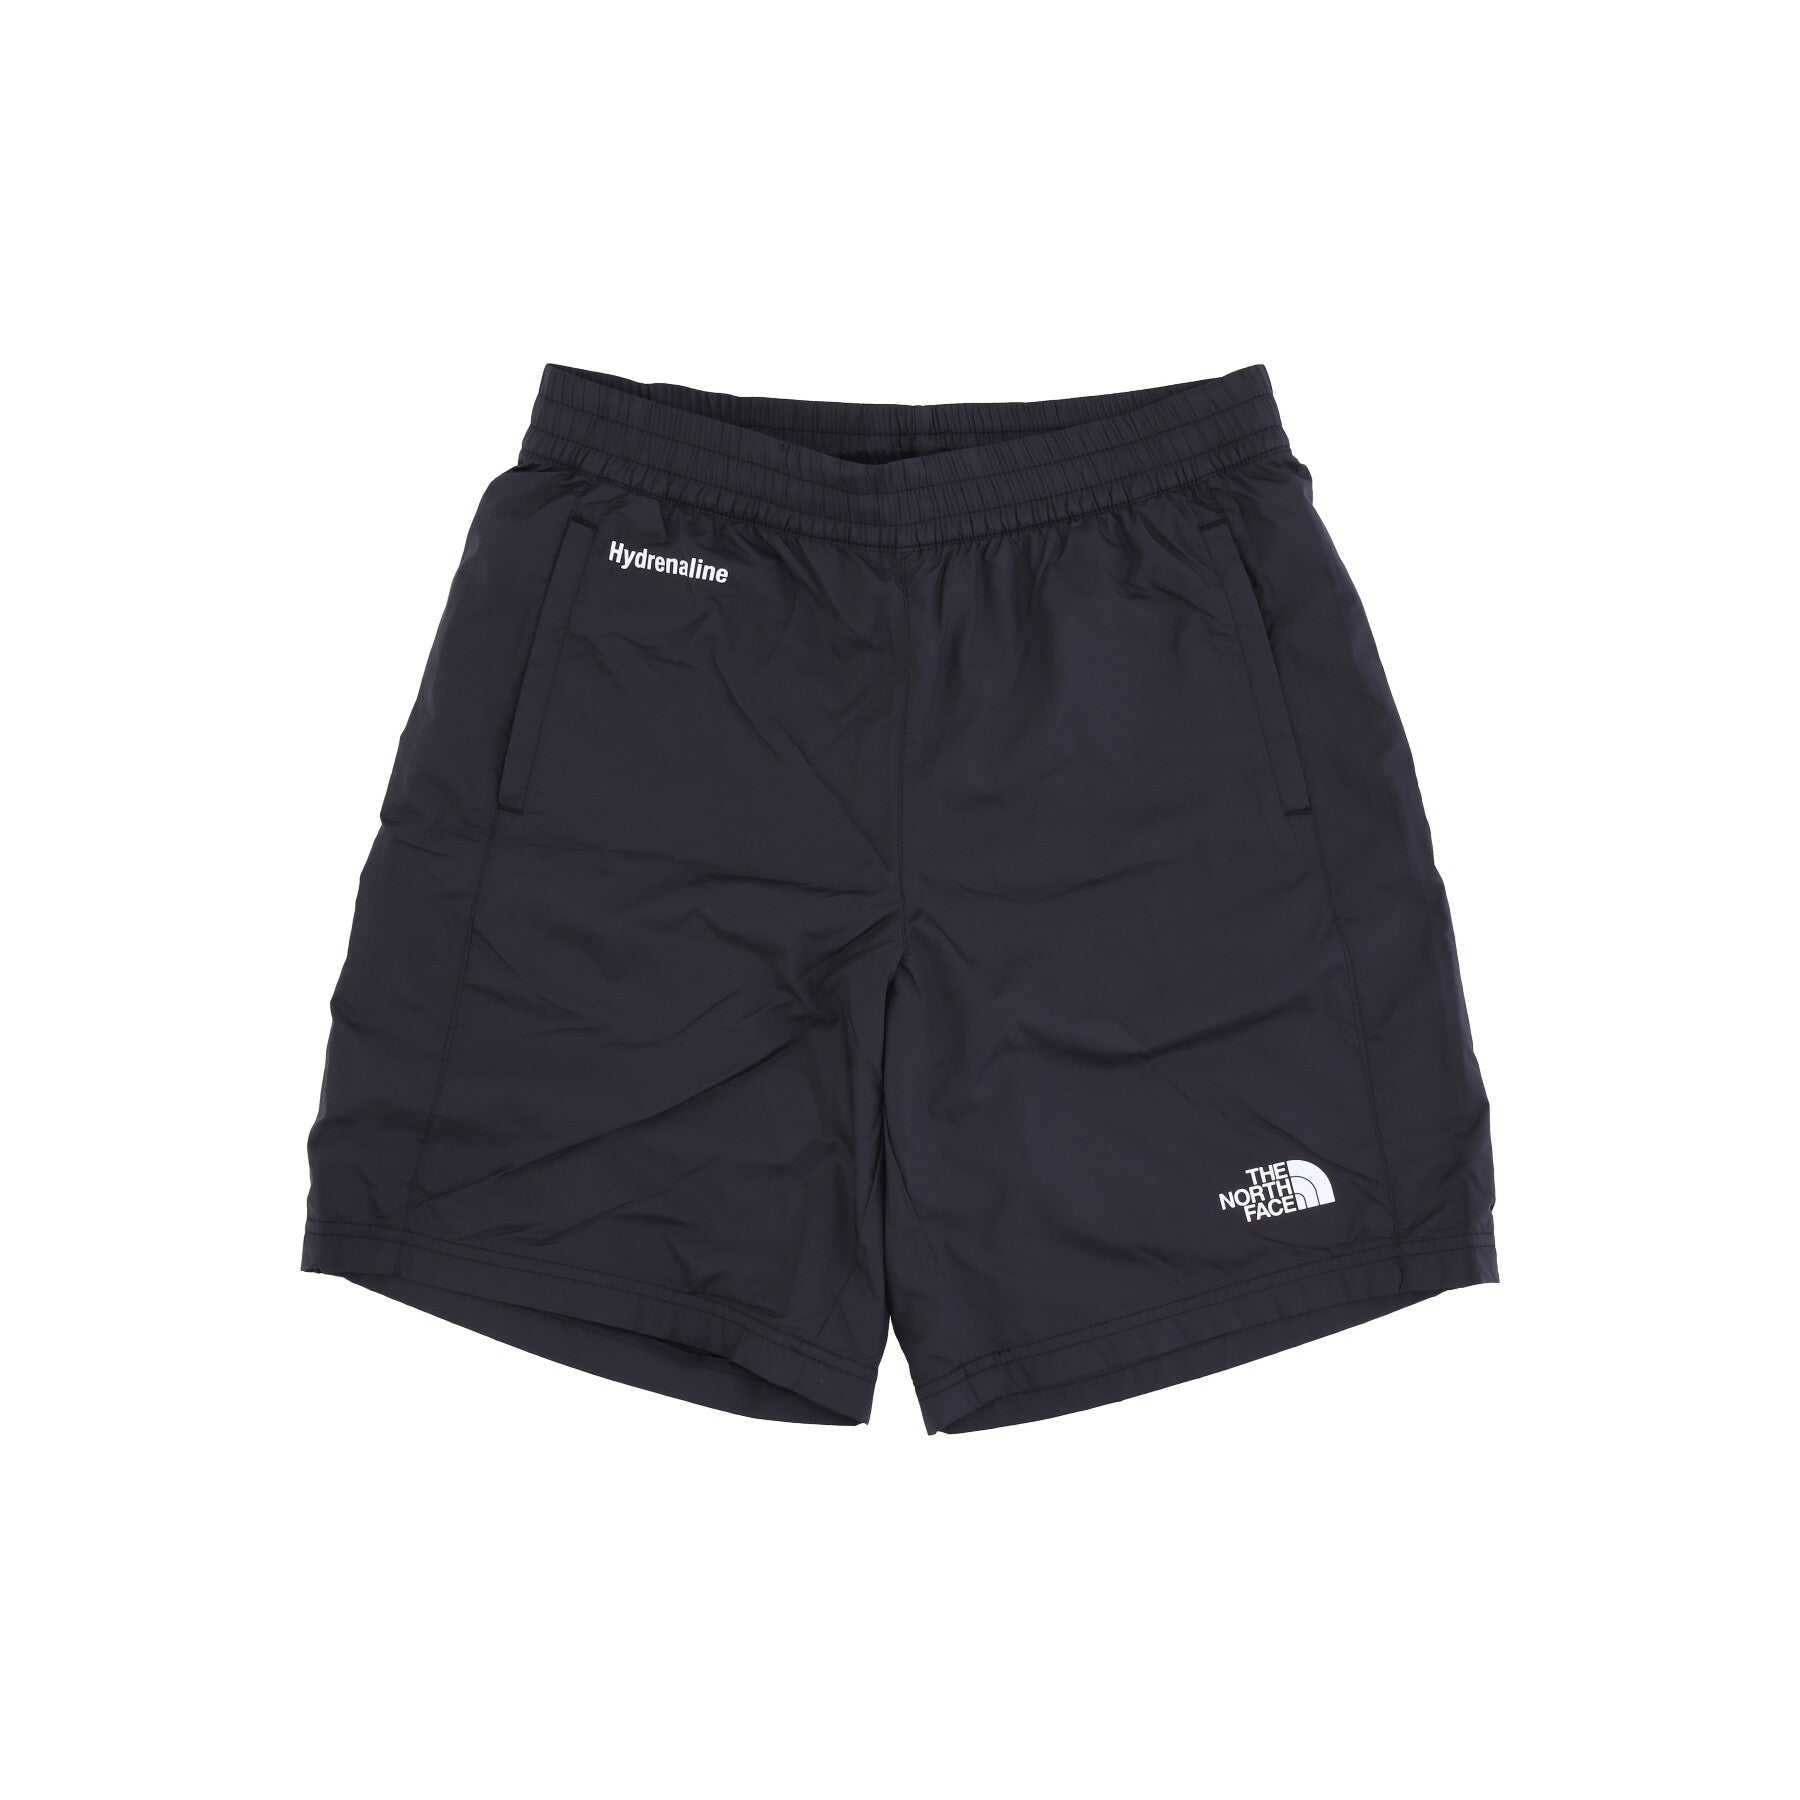 Hydrenaline Short 2000 Black Men's Shorts